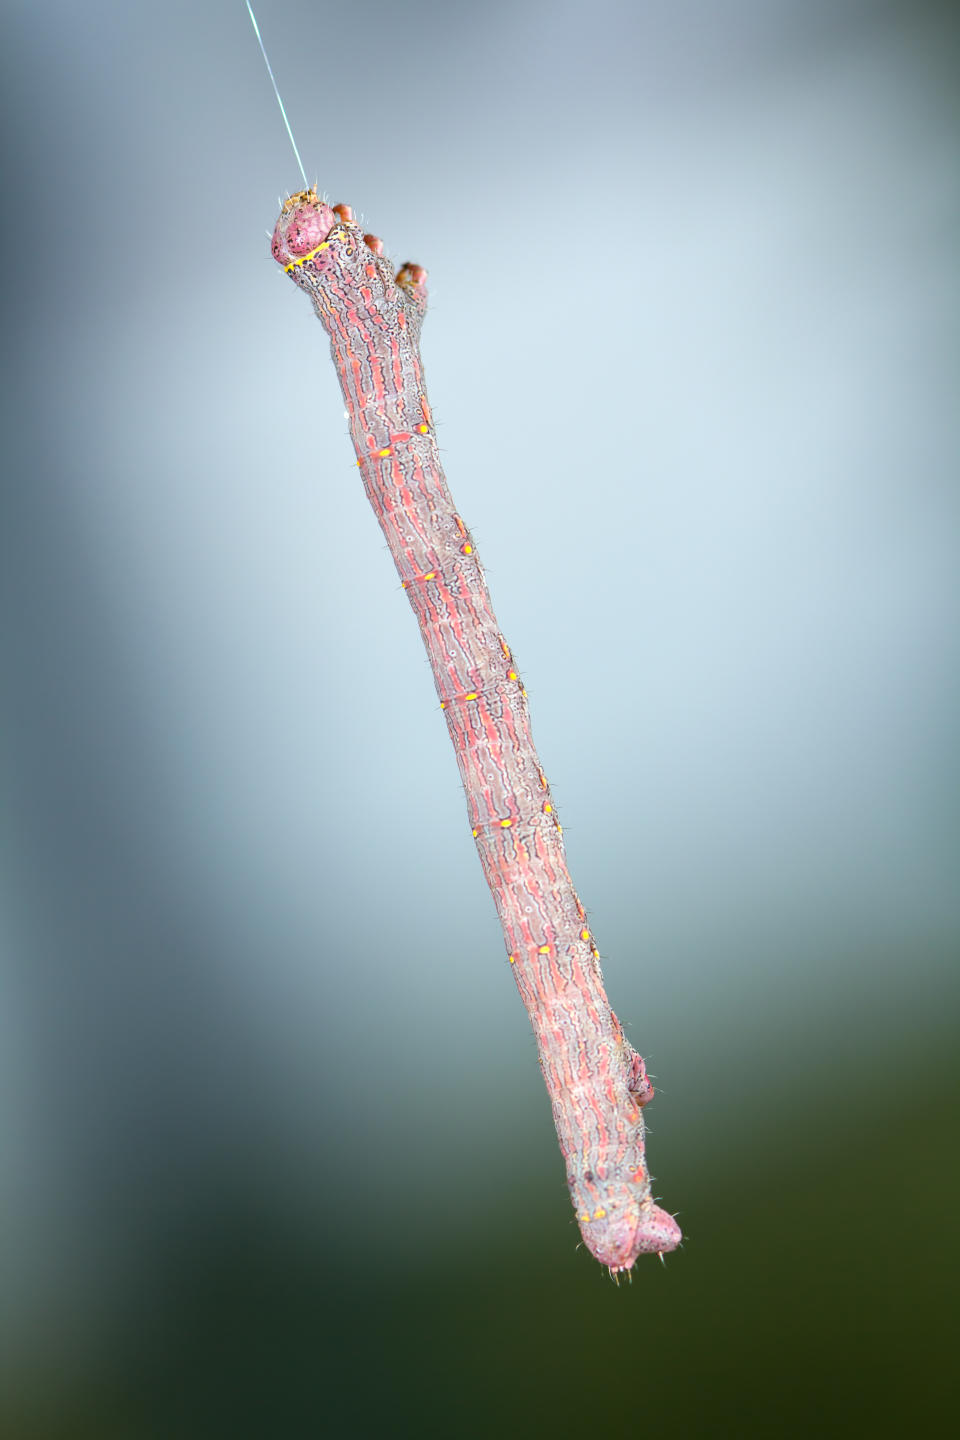 A Geometer moth caterpillar hanging on silk fibre.